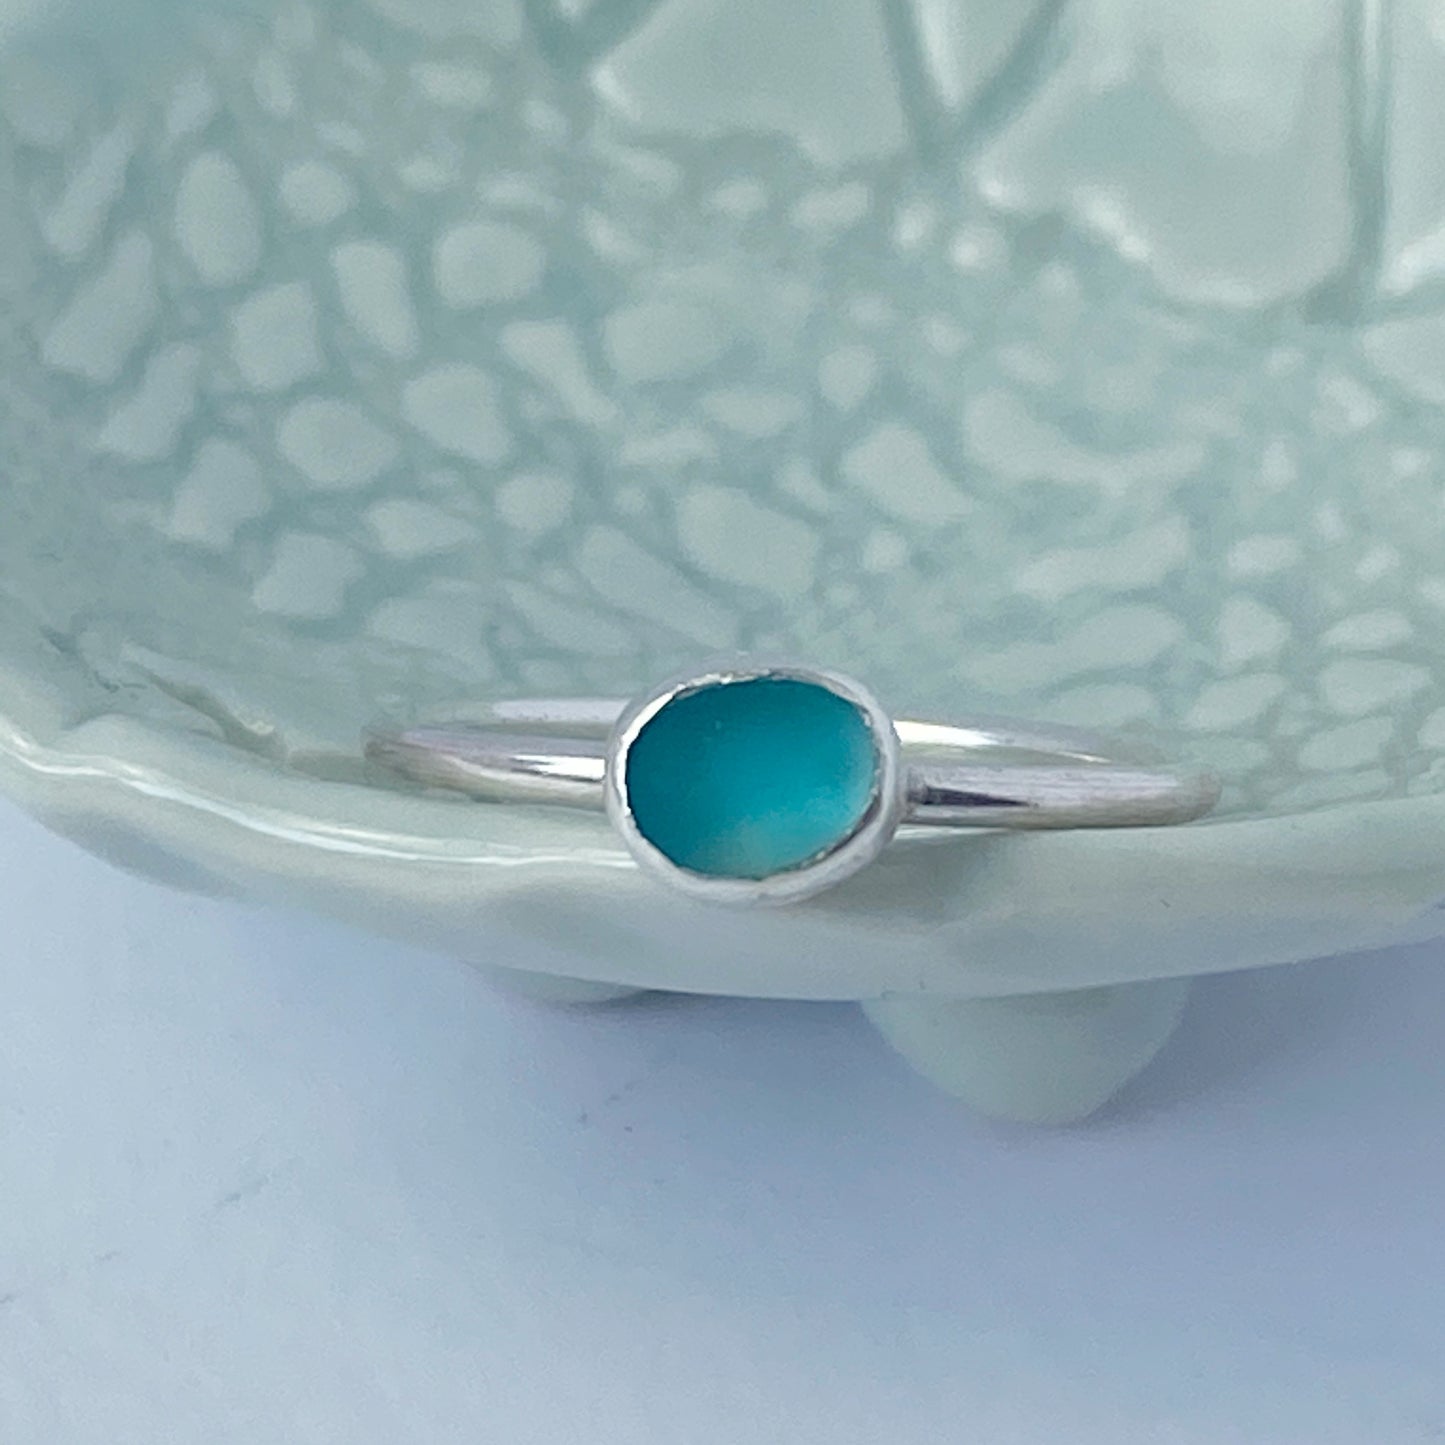 Aquamarine Blue Sea glass Ring